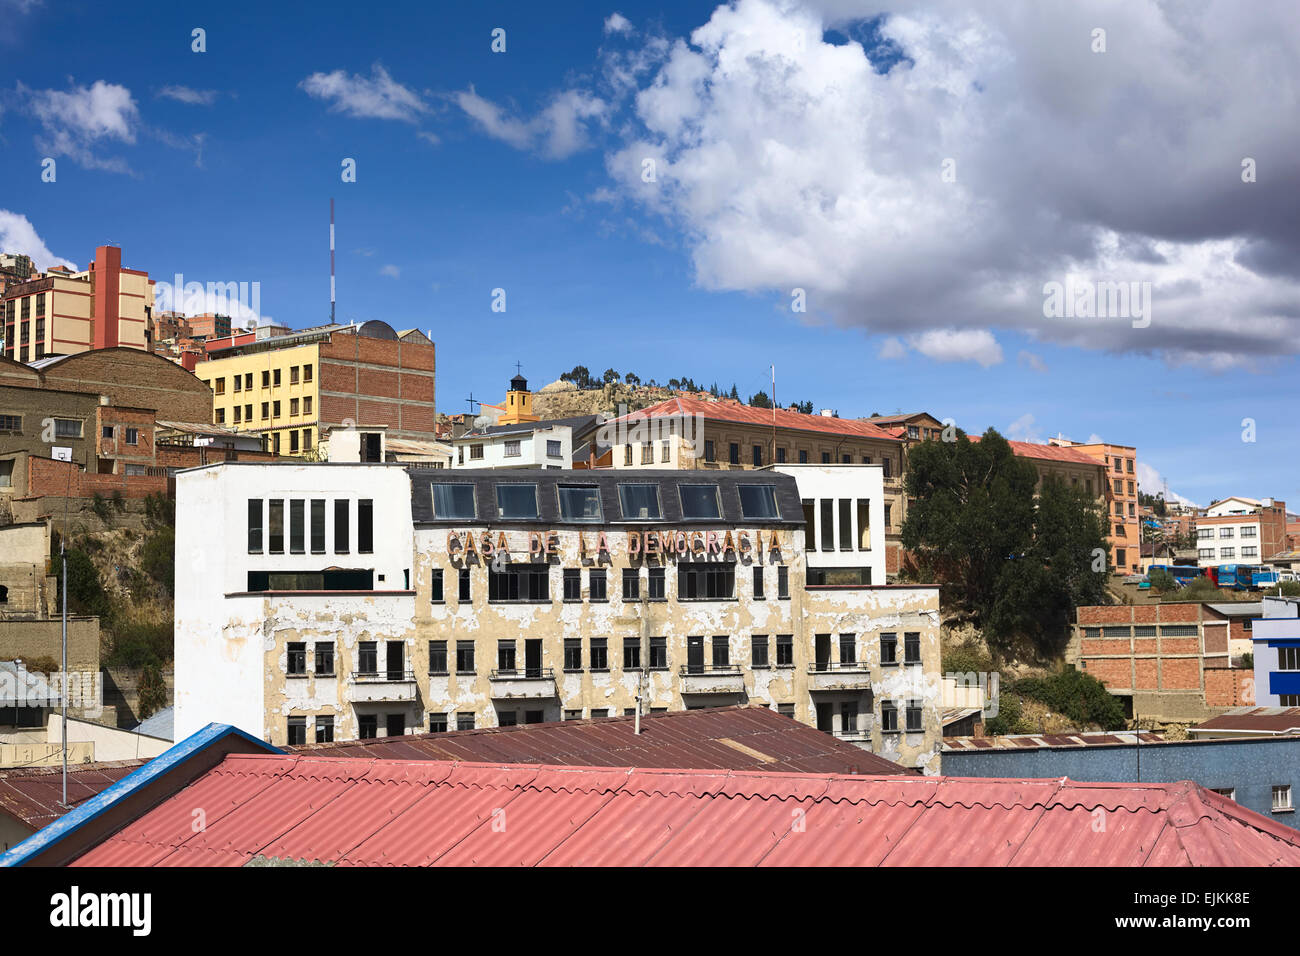 View over rooftops onto the building of the Casa de la Democracia (House of Democracy) in the city center of La Paz, Bolivia Stock Photo